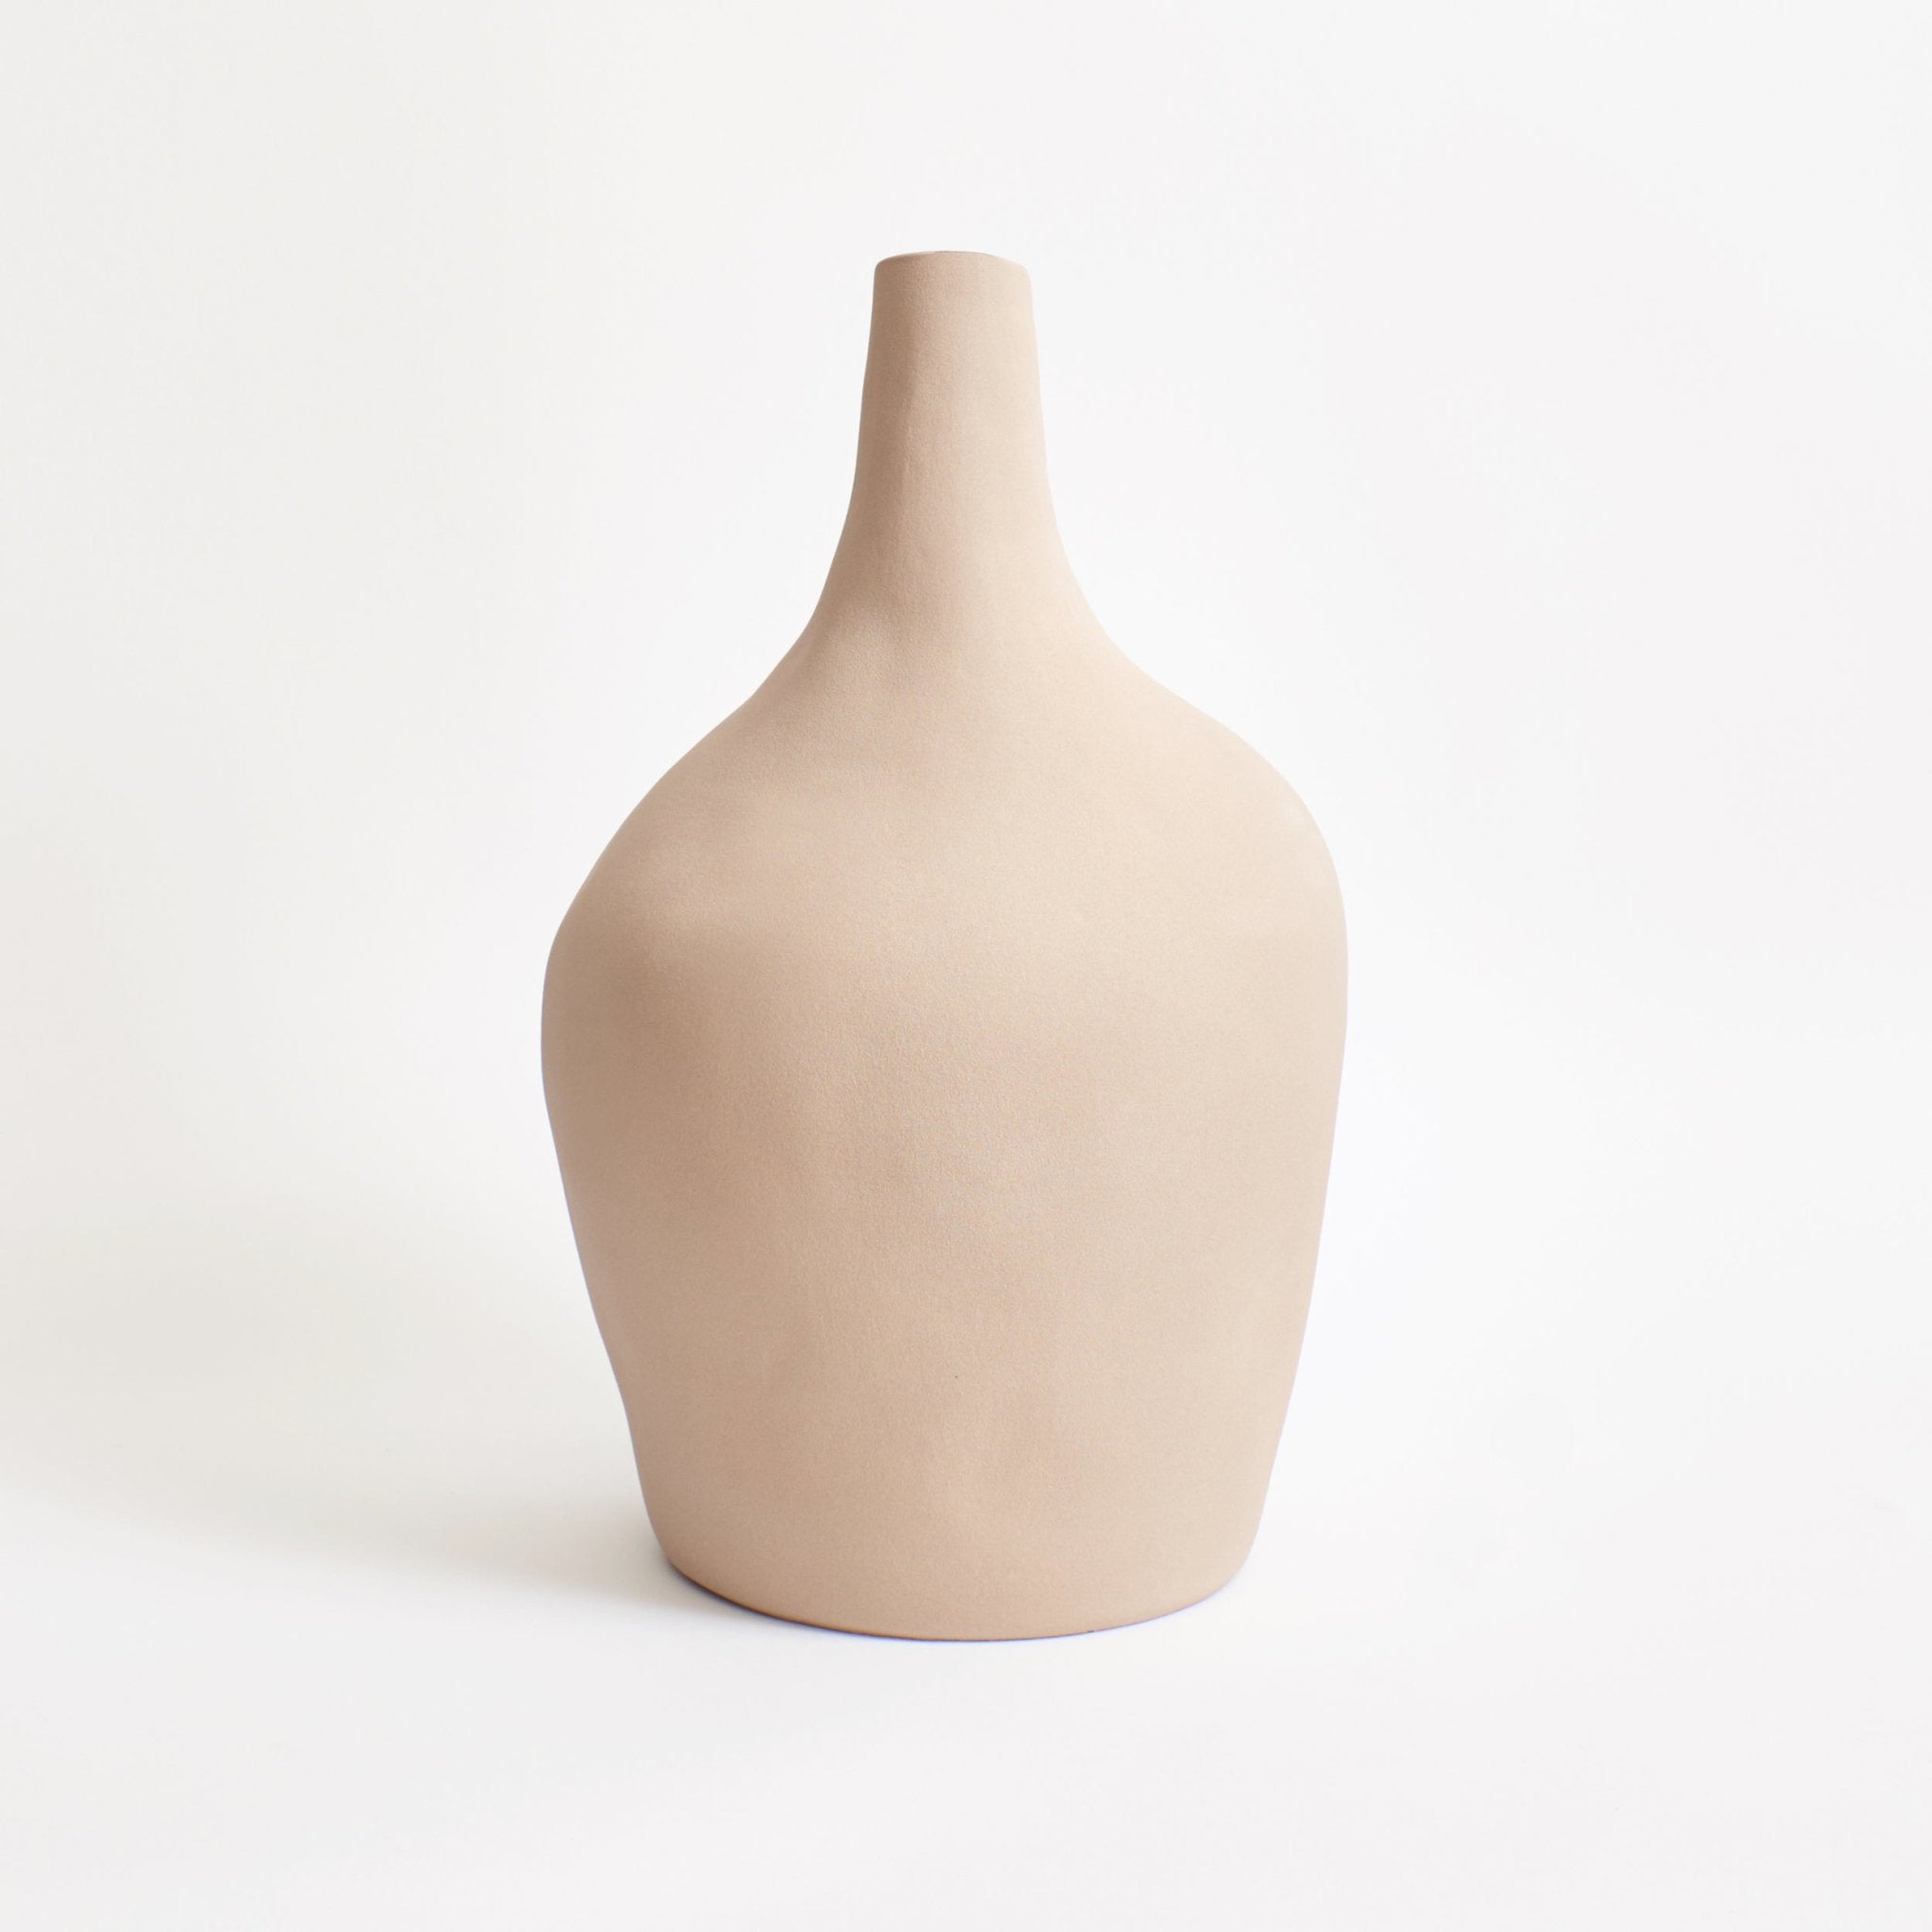 Sailor Vase - Beige vase from Project 213A